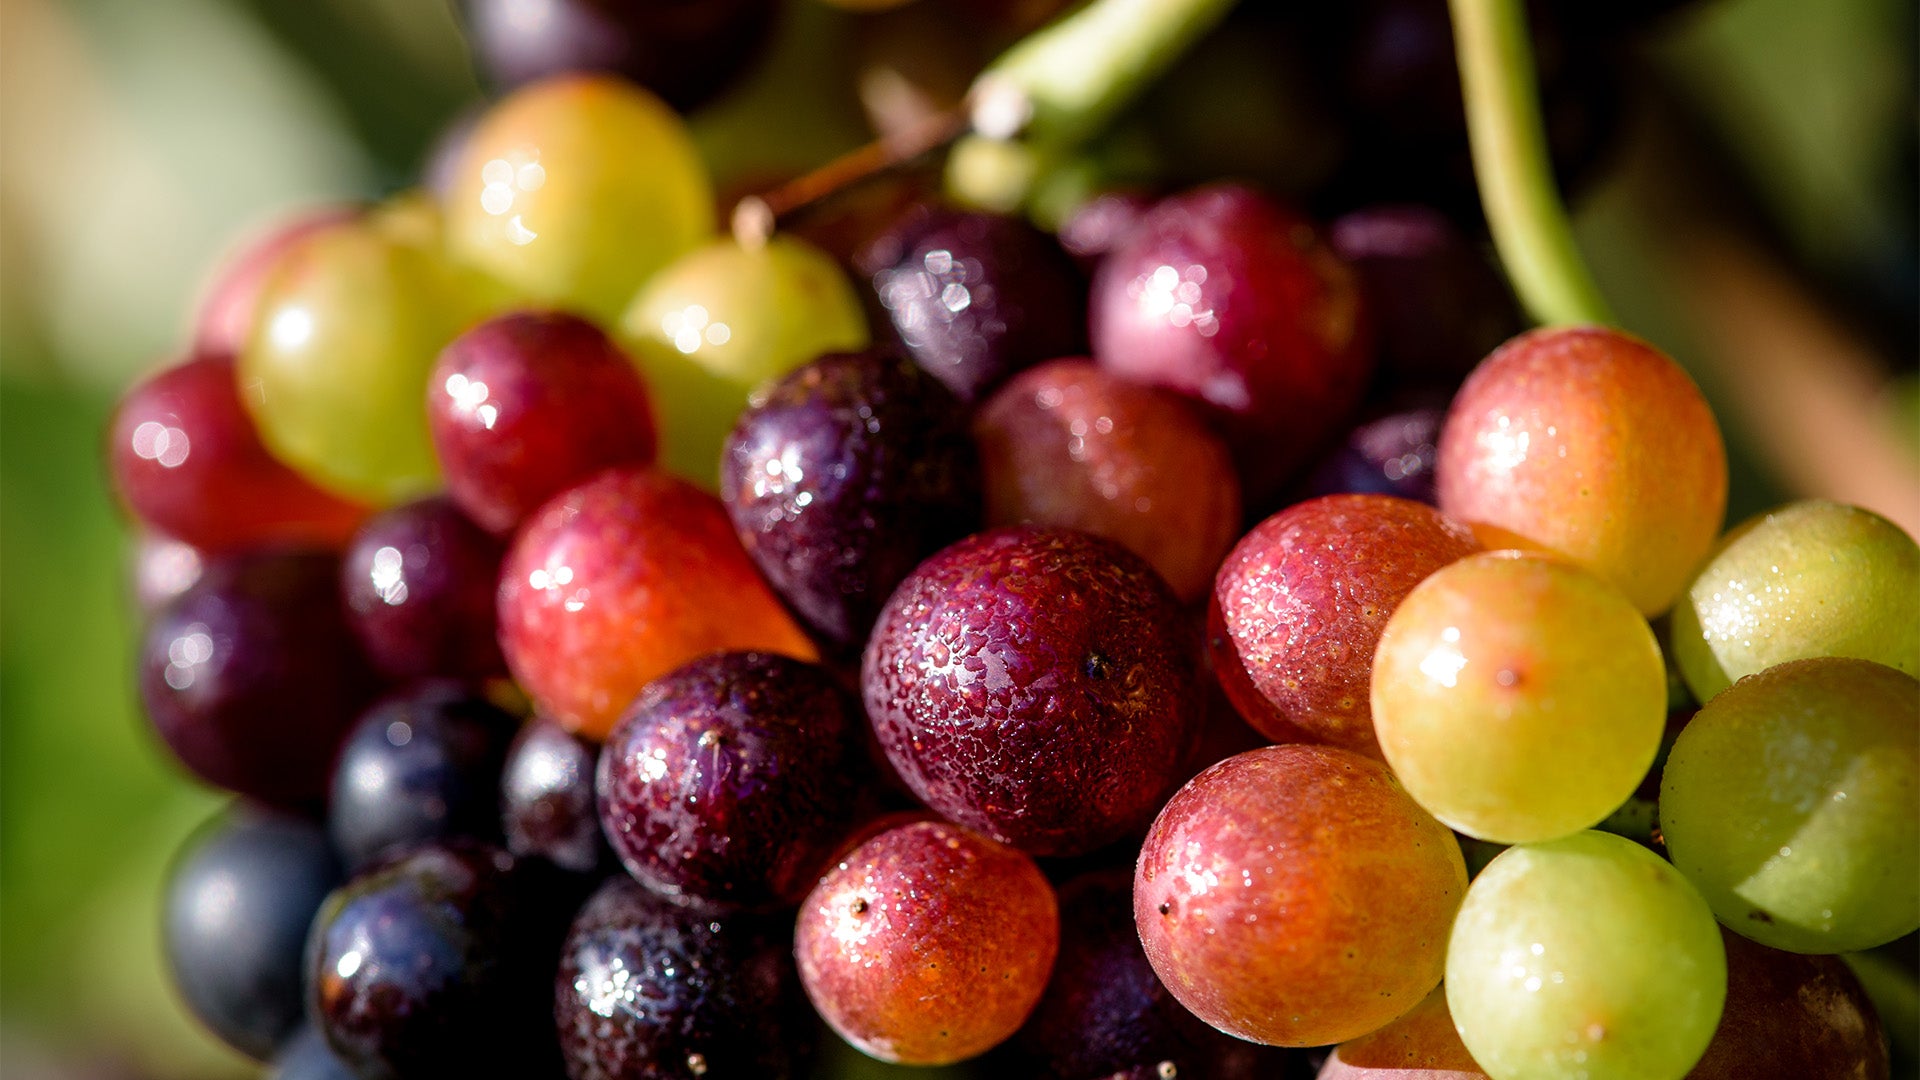 Veraison, harvest and progress in the vineyard